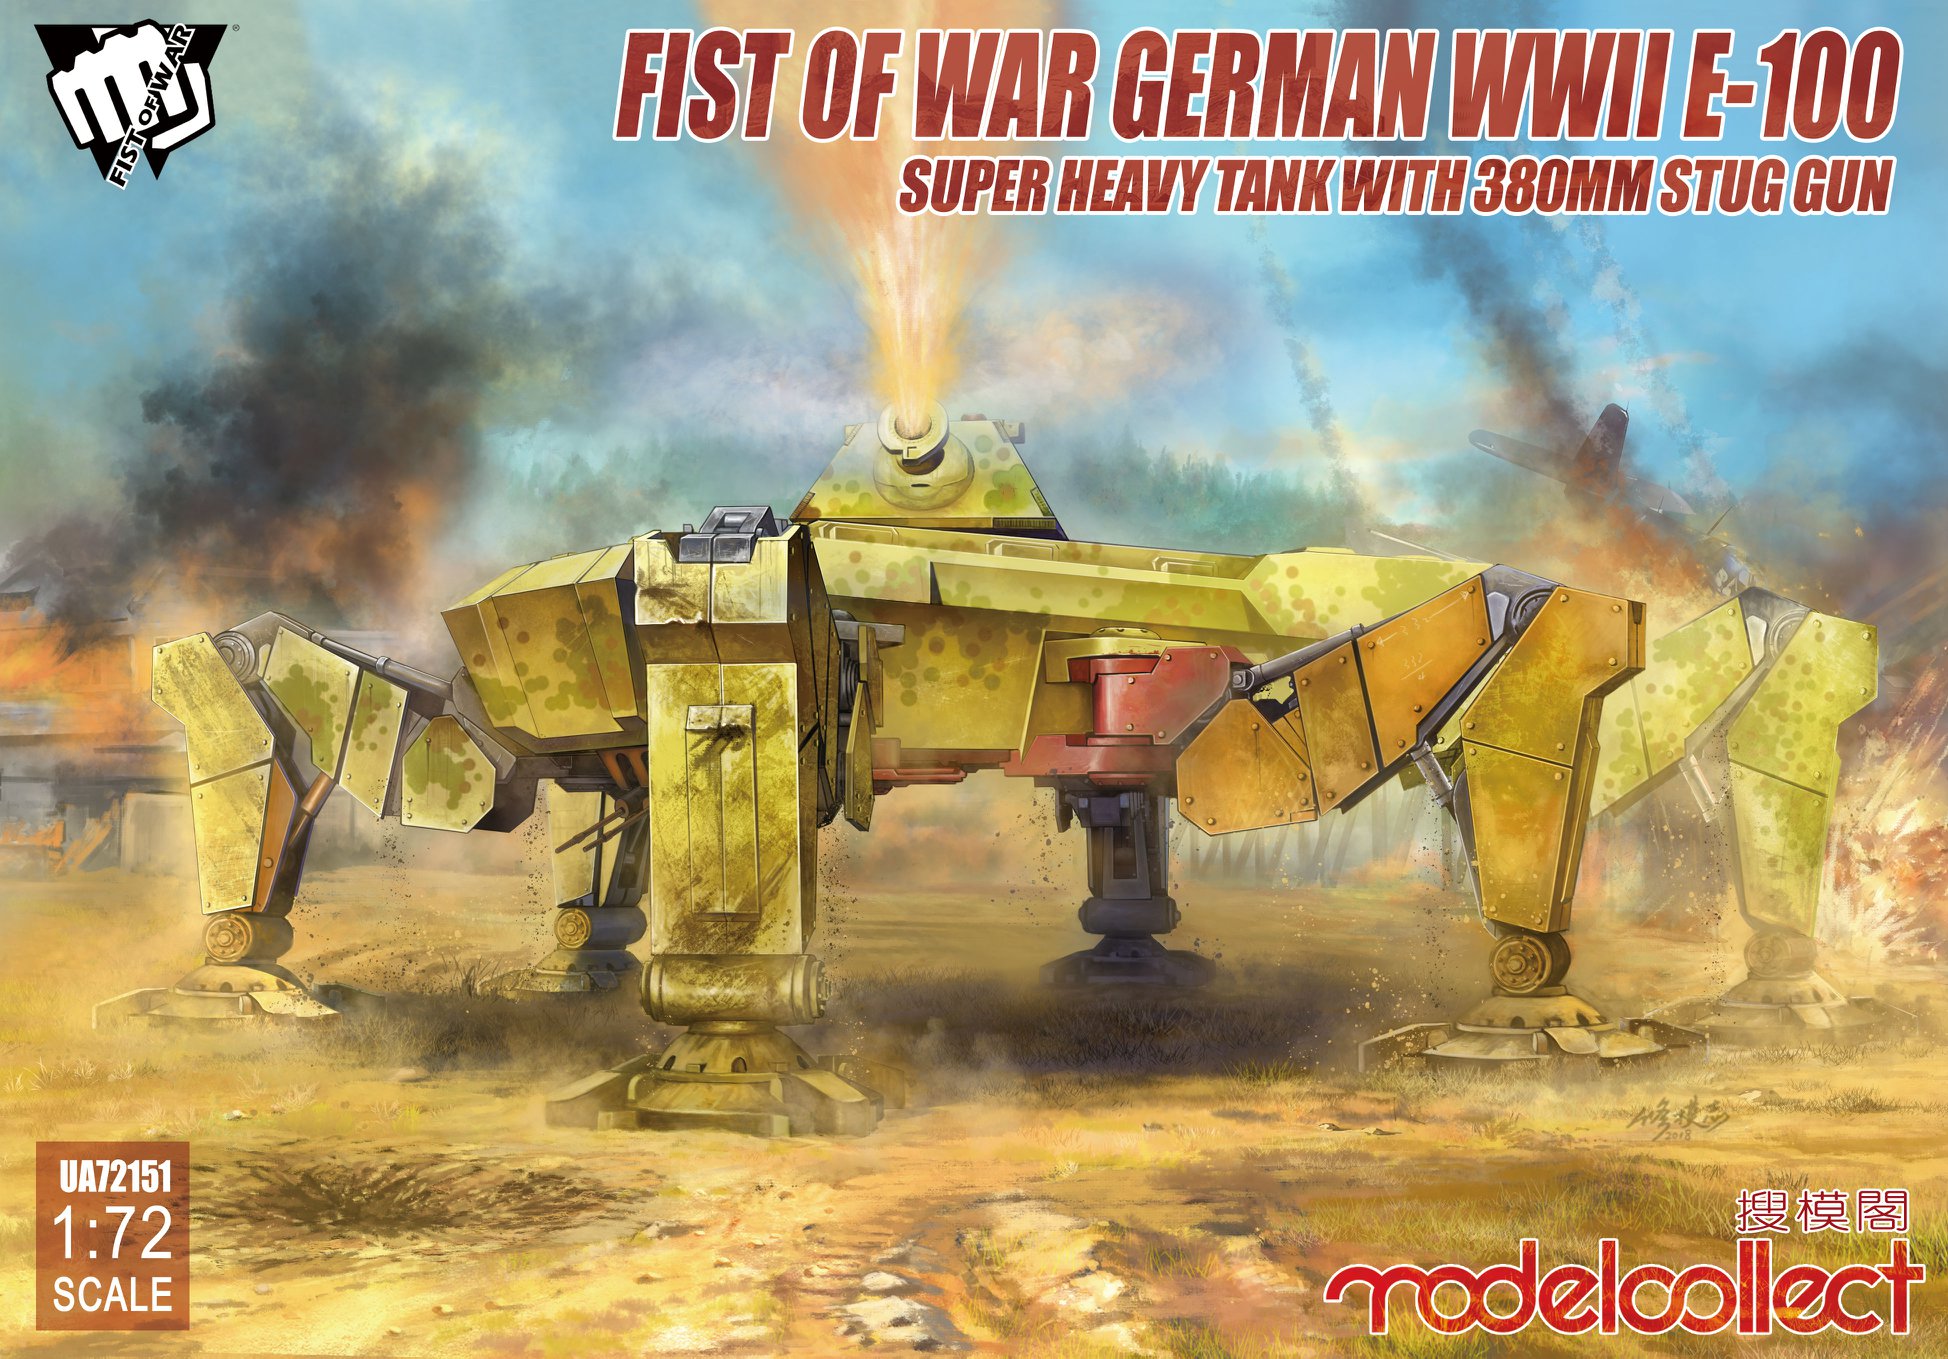 Fist of War - German E-100 Super Heavy Tank with 380mm Stug gun